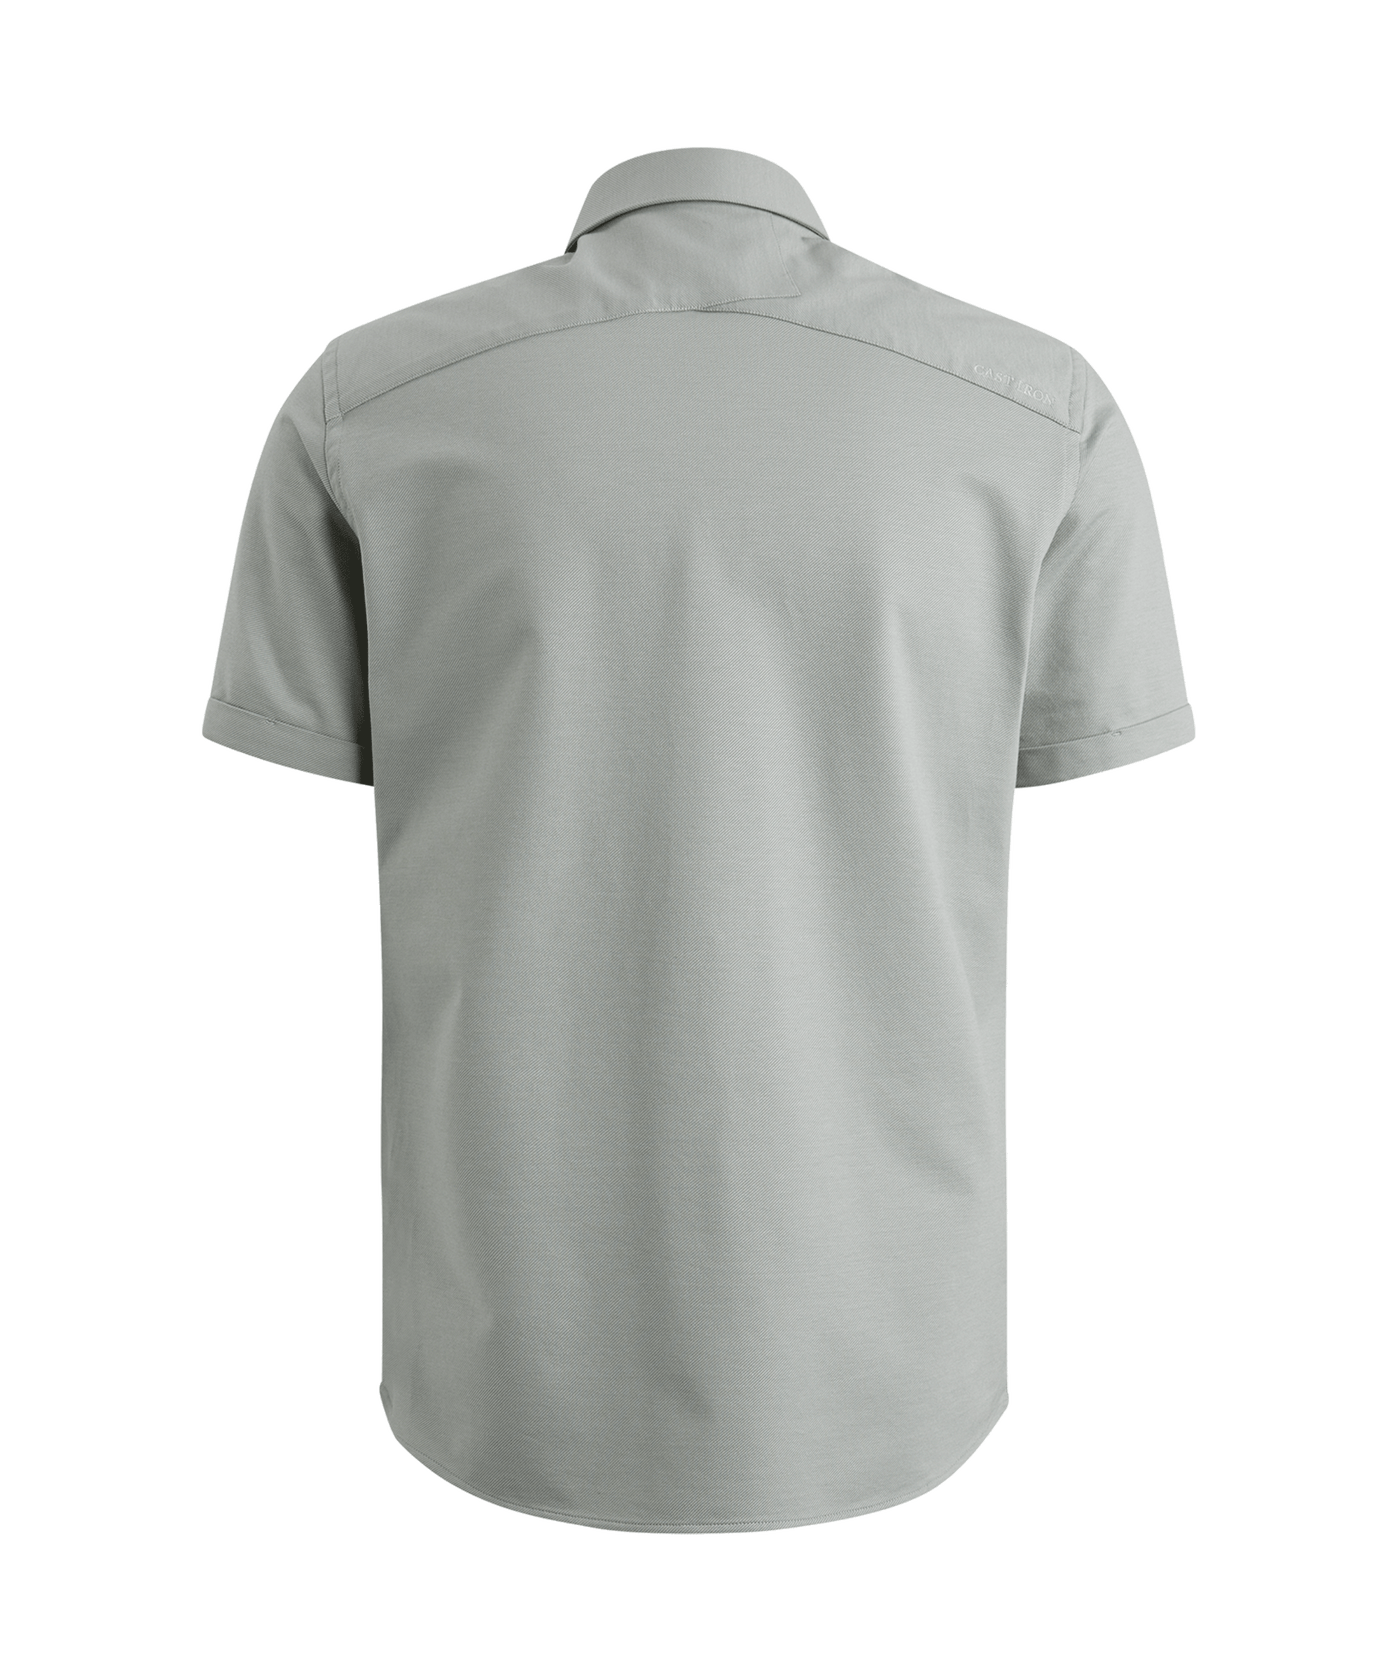 Cast Iron - Csis2404274 - Twill Jersey Shirt - 7014 Silver